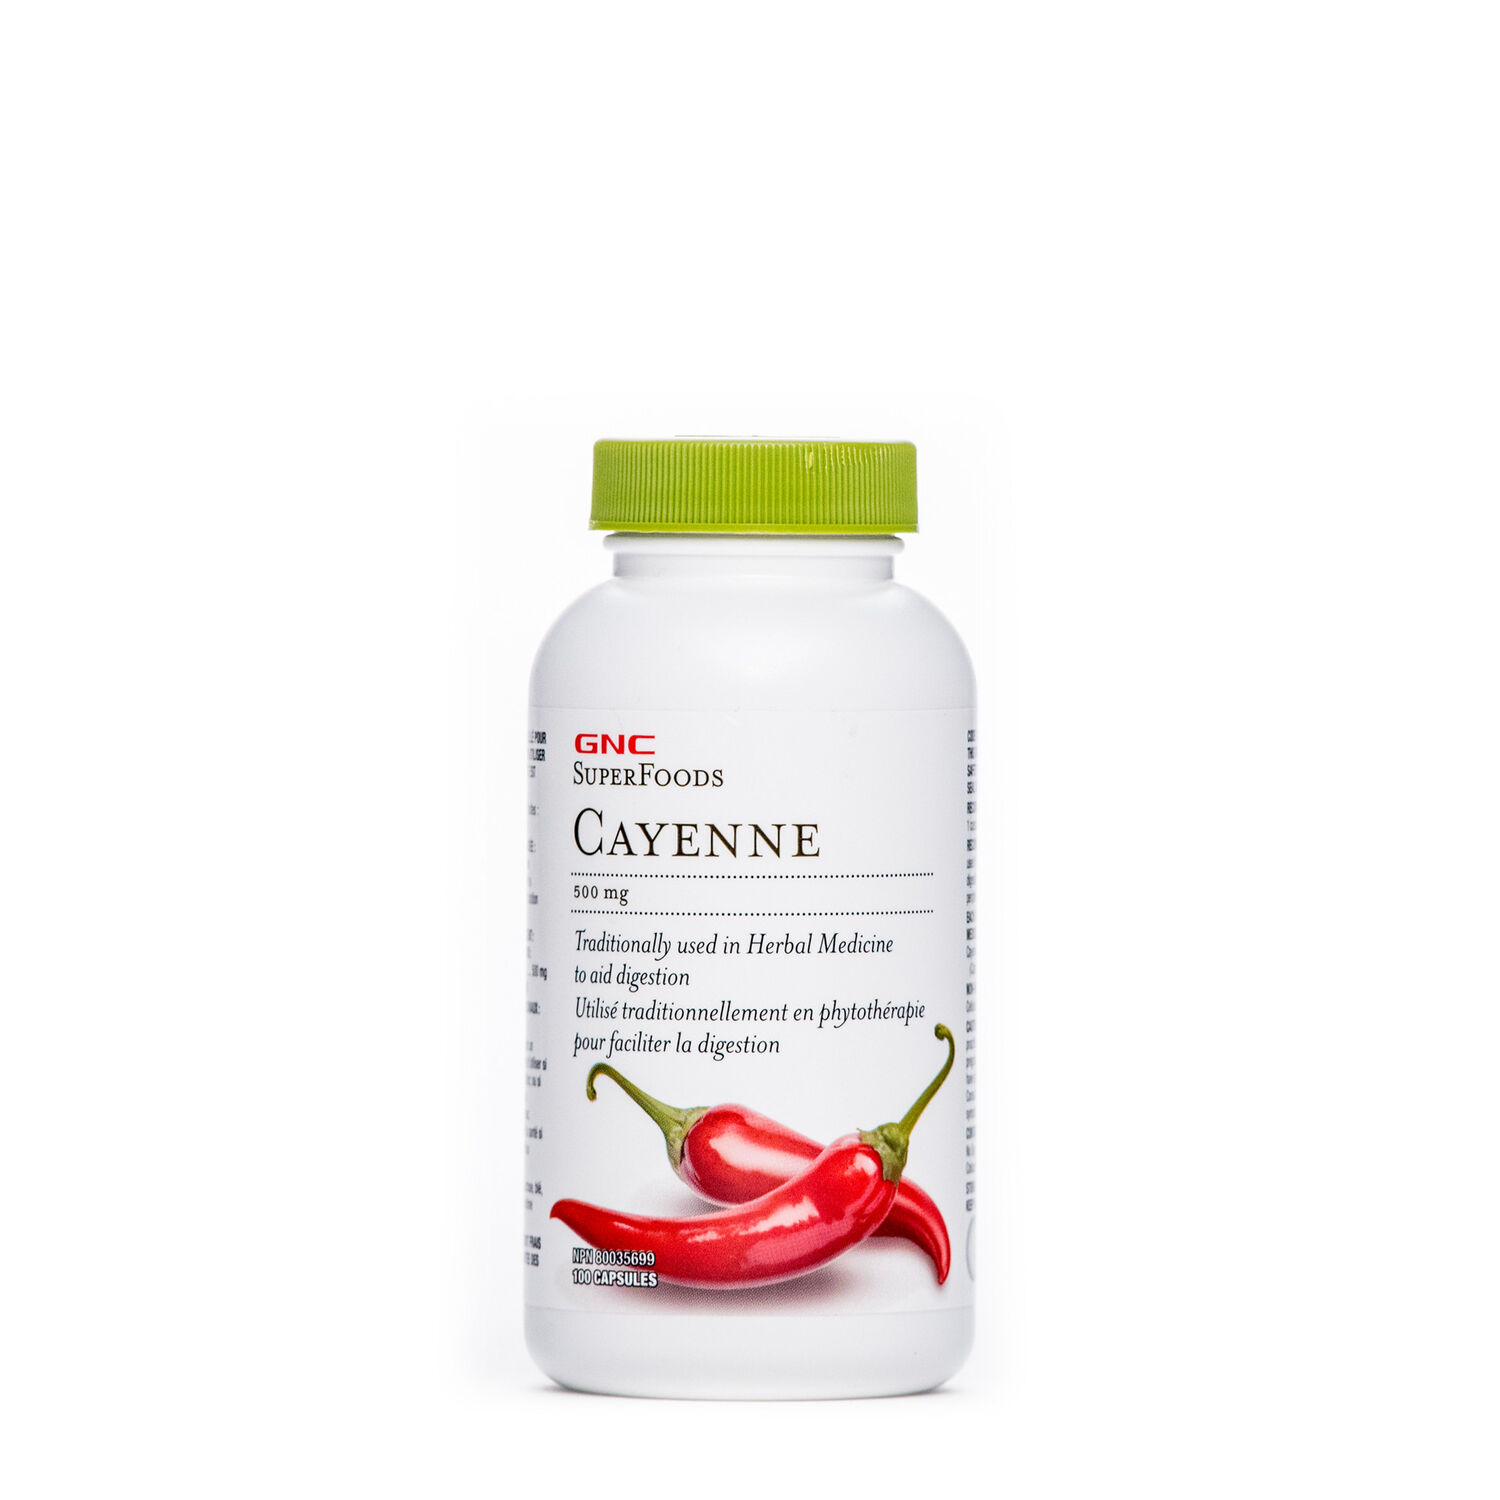 Cayenne pepper herbal remedy.